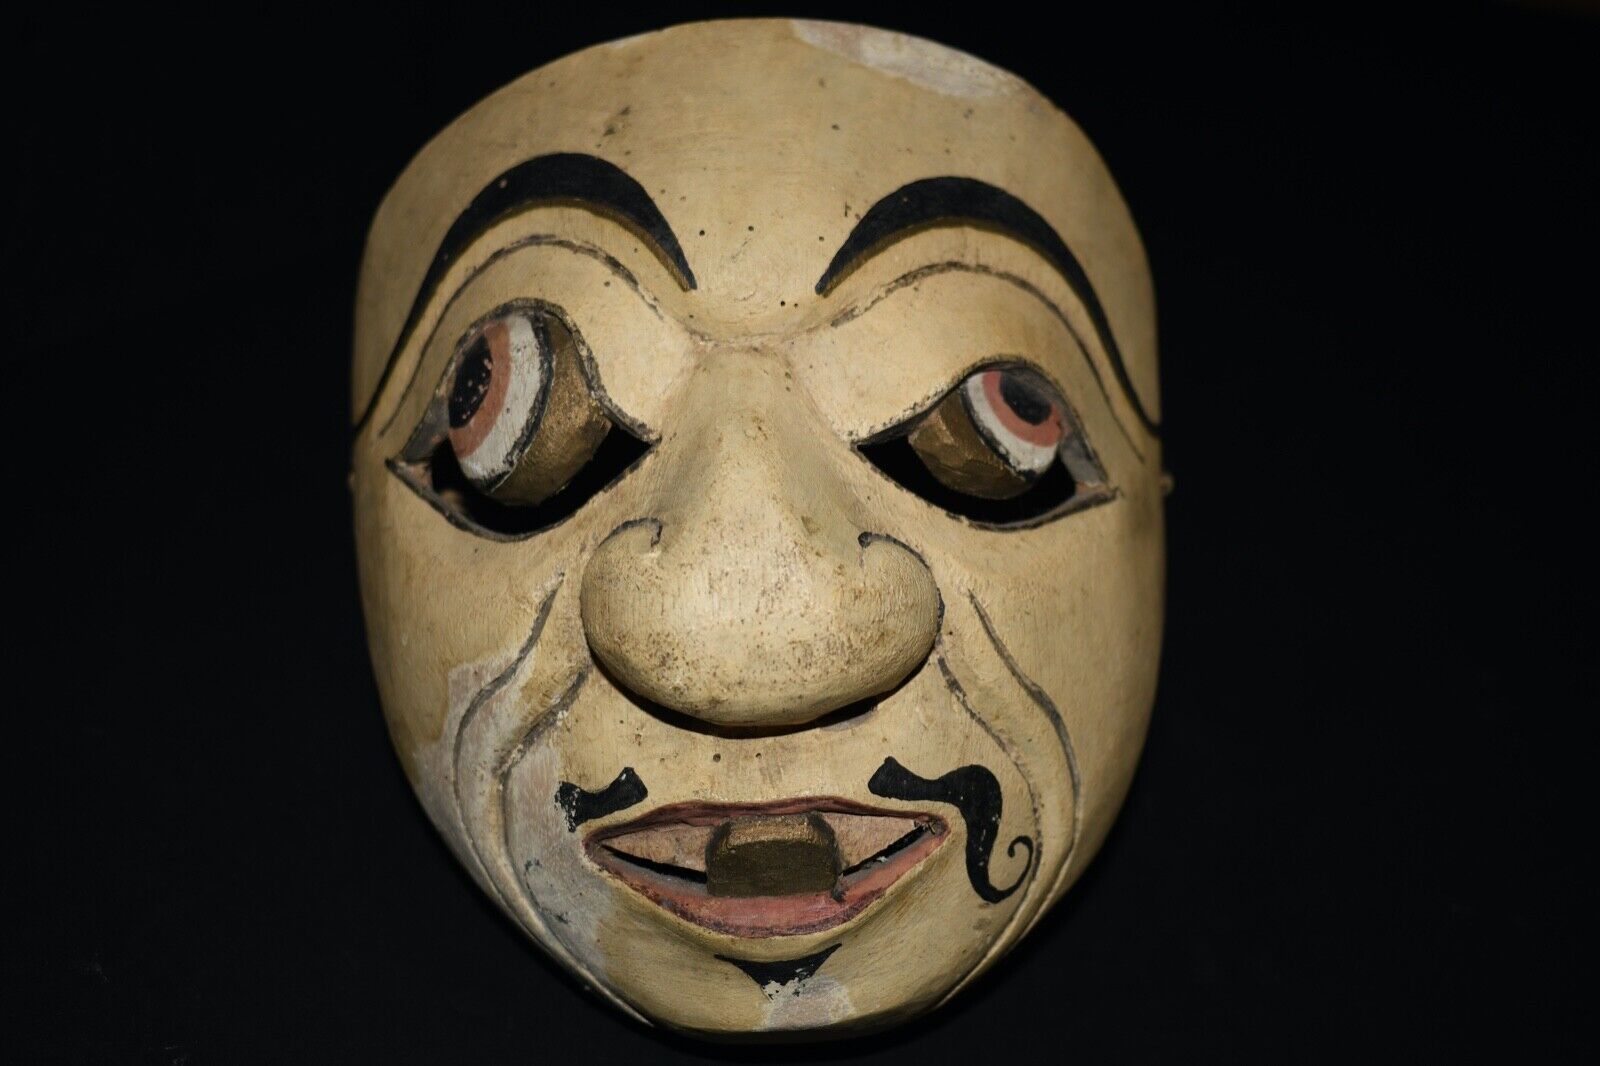 Antique / Vintage Carved Wood Mask From Bali / East Java Indonesia